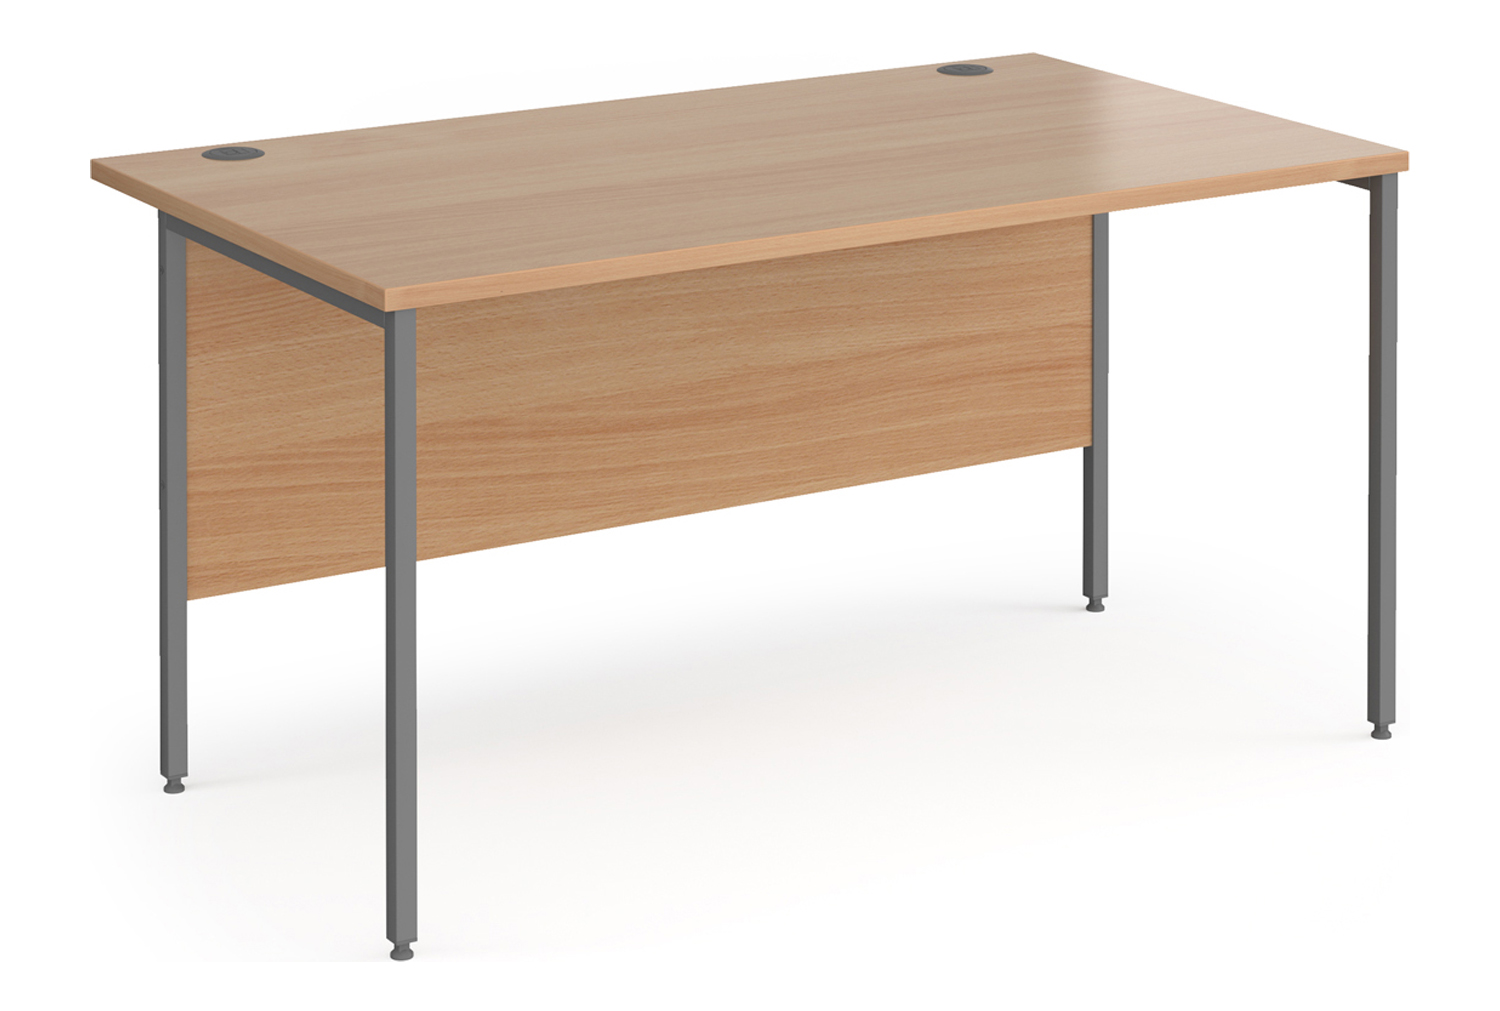 Value Line Classic+ Rectangular H-Leg Office Desk (Graphite Leg), 140wx80dx73h (cm), Beech, Express Delivery